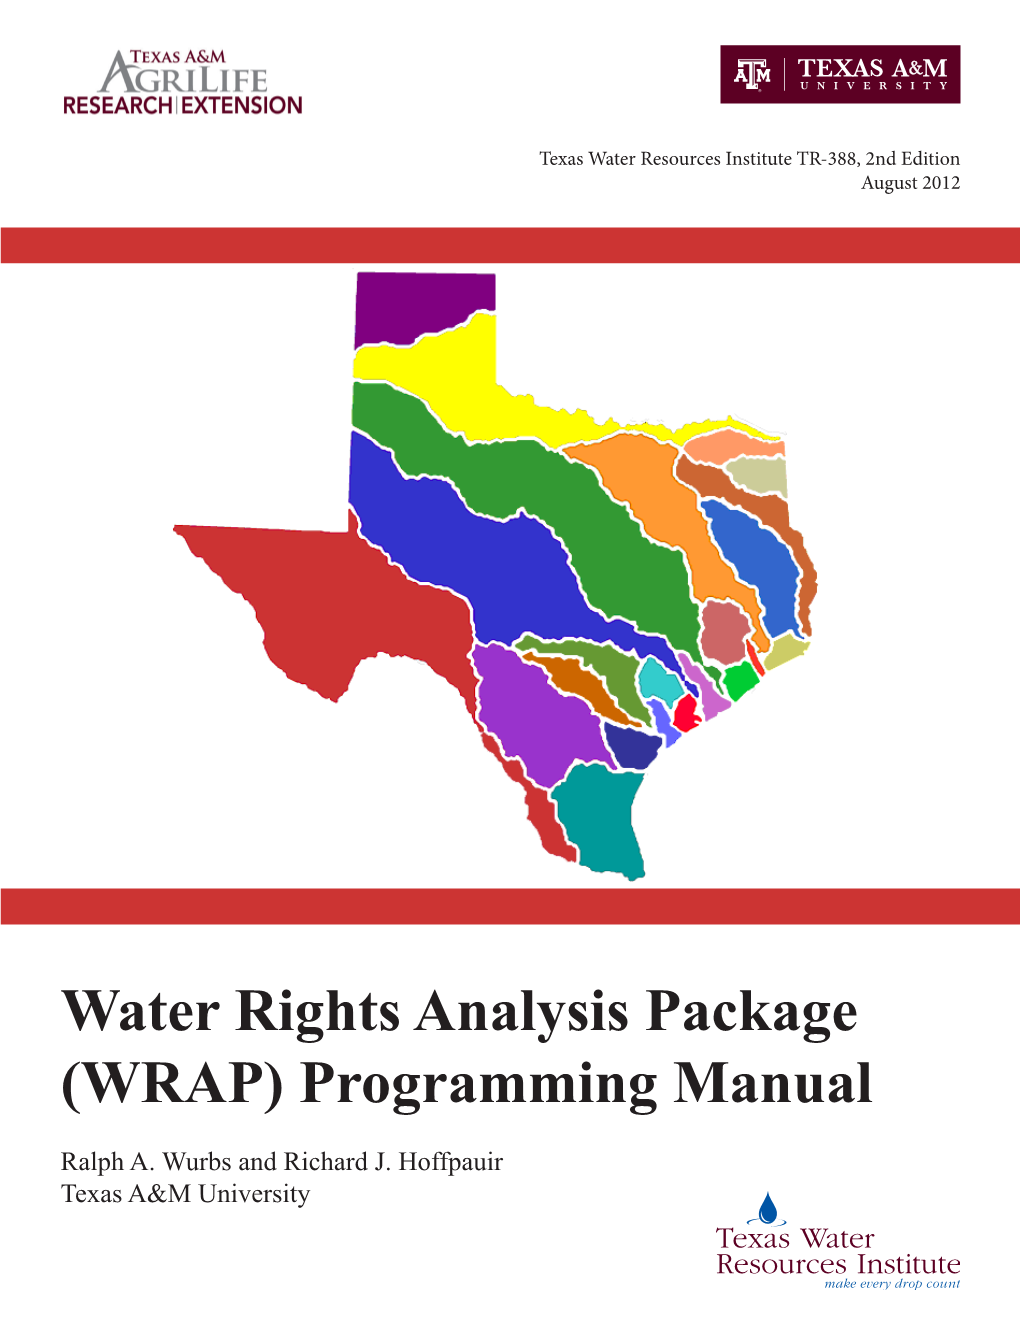 TR-388, 2Nd Edition WRAP Programming Manual